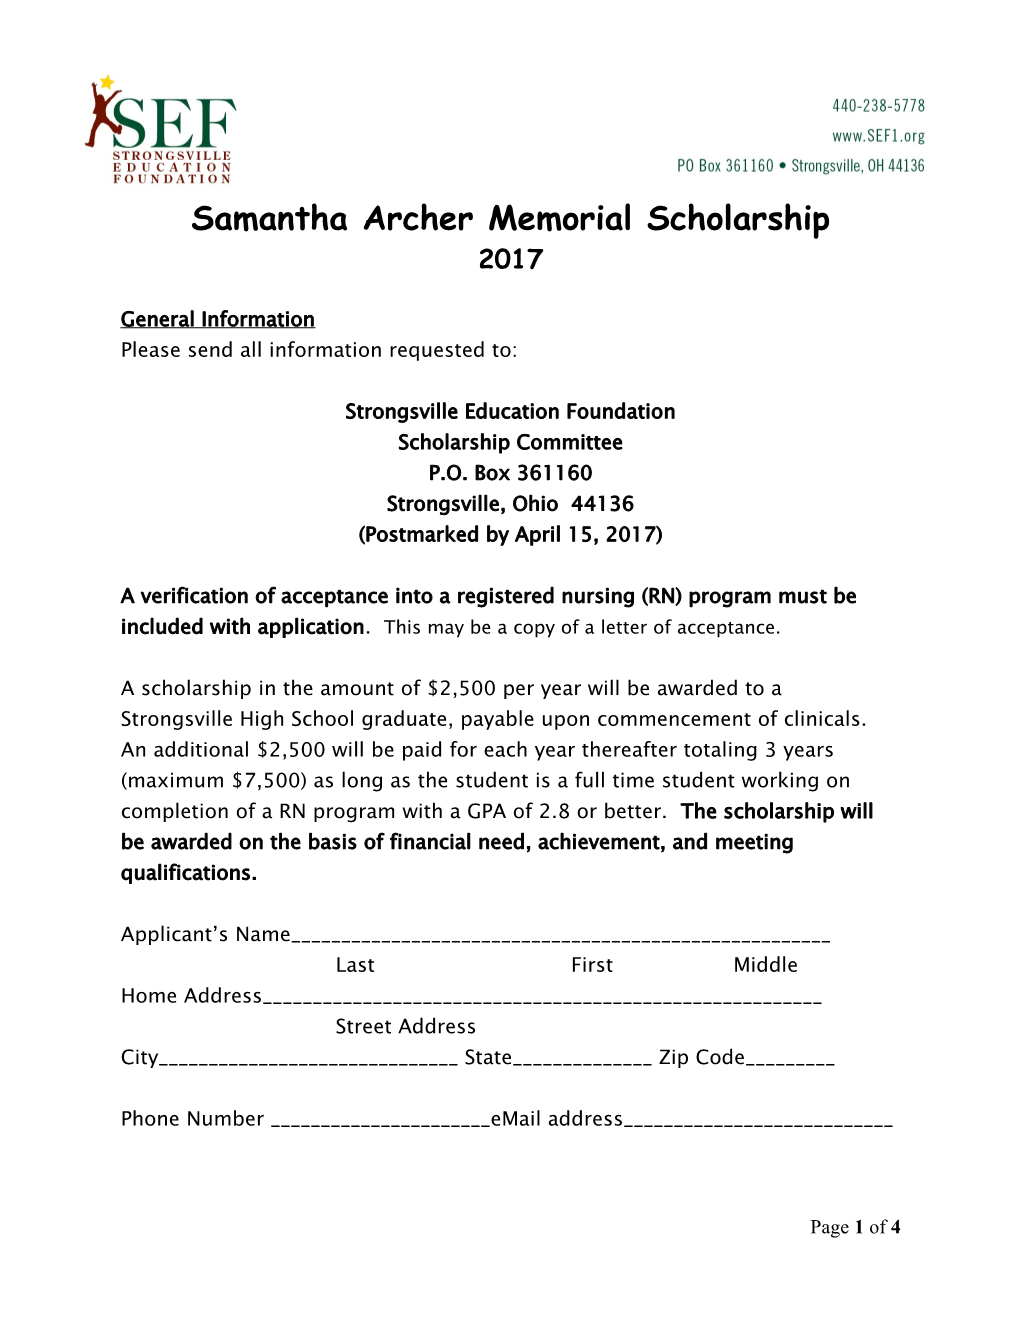 Samantha Archer Memorial Scholarship